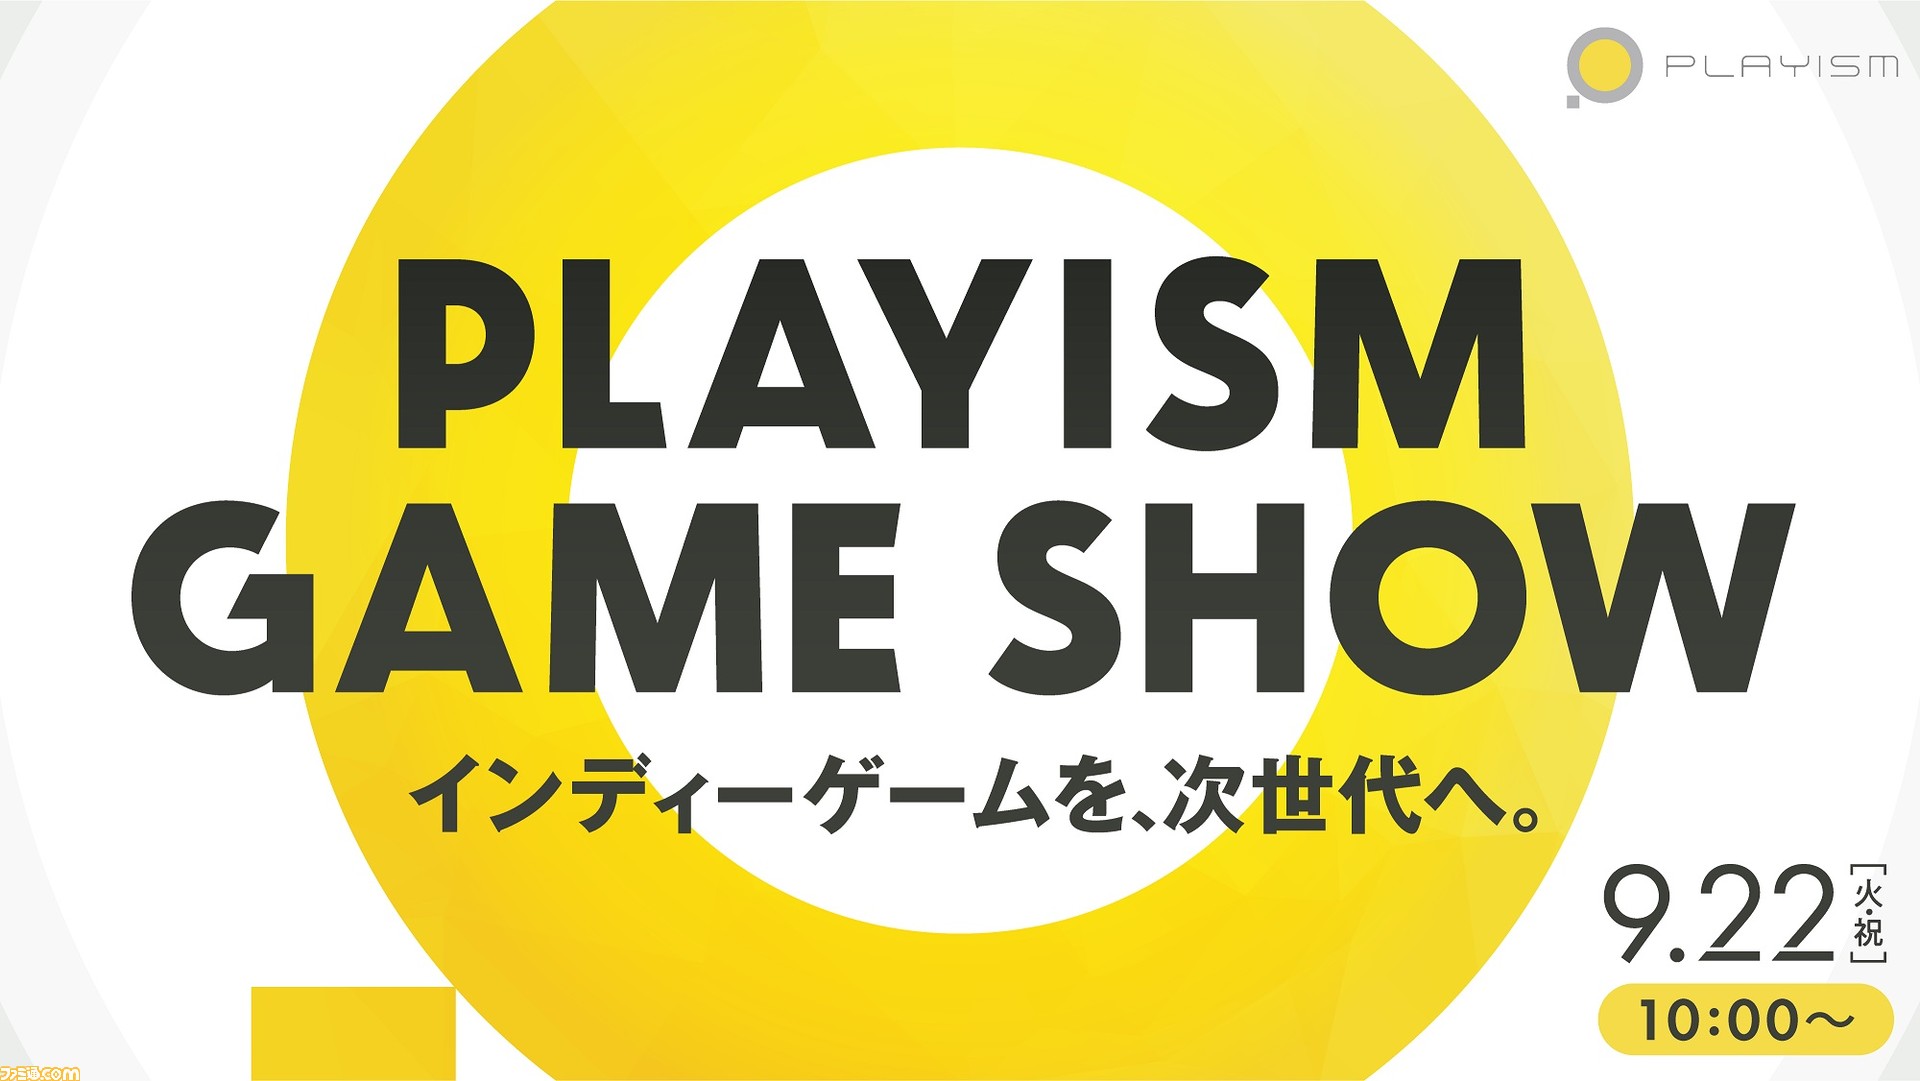 Playism Game Show が9 22午前10時からオンライン配信決定 厳選した多数の新作タイトル情報をお届け Tgs ファミ通 Com